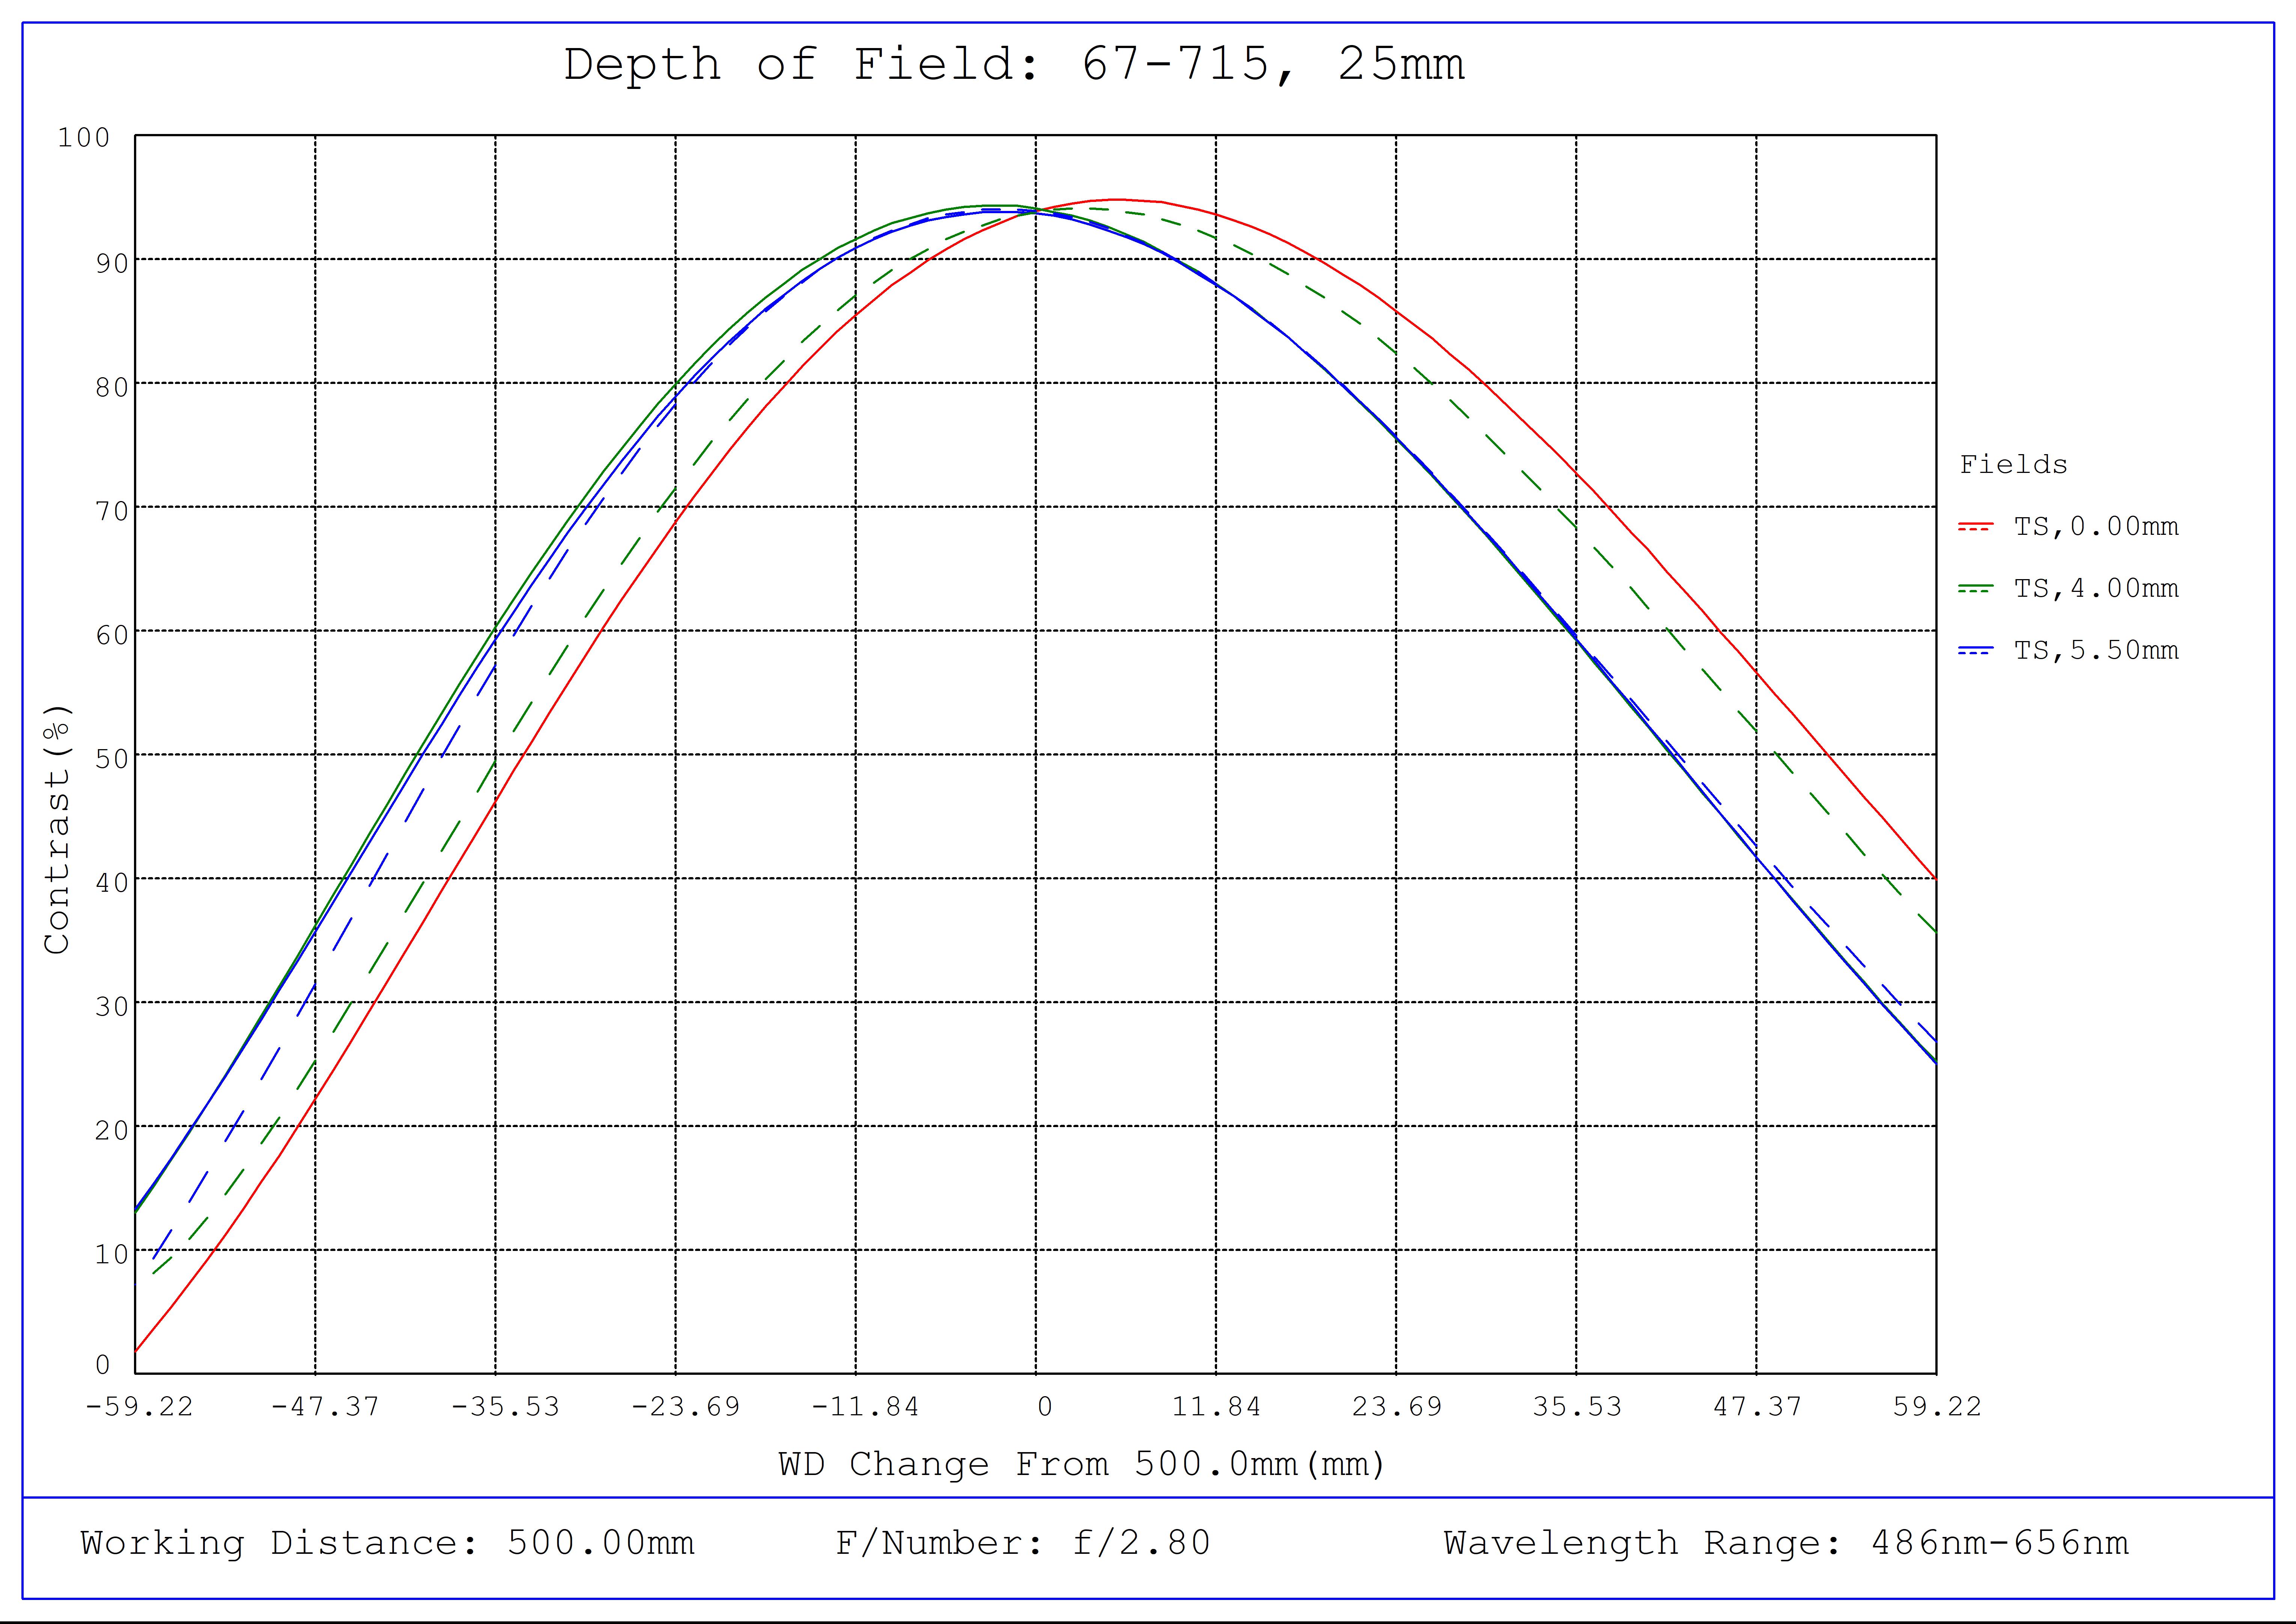 #67-715, 25mm C VIS-NIR Series Fixed Focal Length Lens, Depth of Field Plot, 500mm Working Distance, f2.8